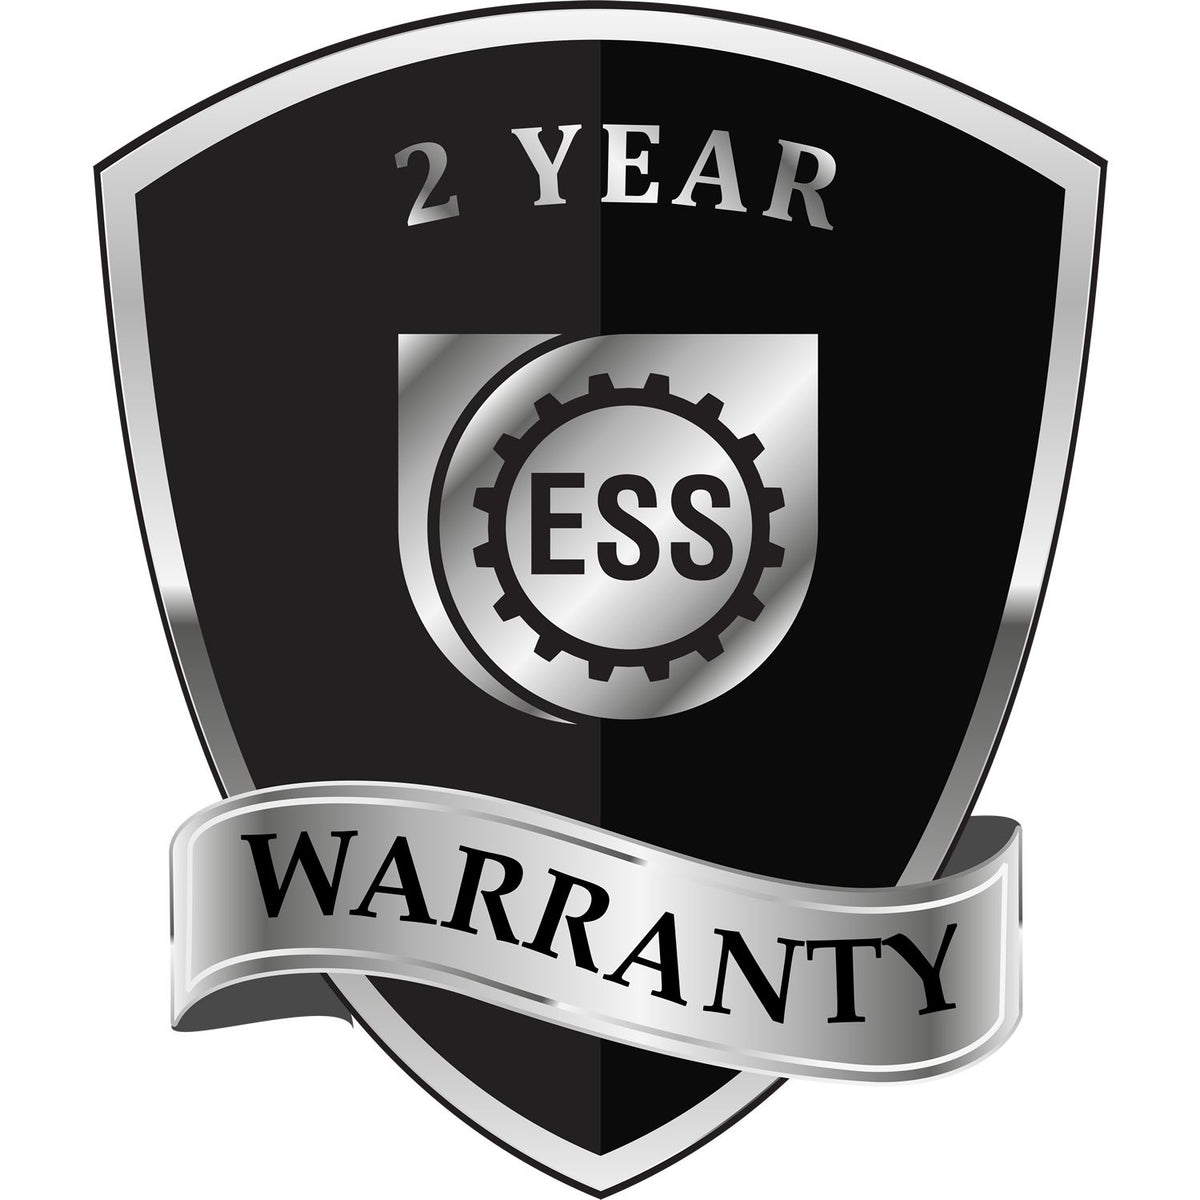 A black and silver badge or emblem showing warranty information for the Handheld Delaware Professional Geologist Embosser